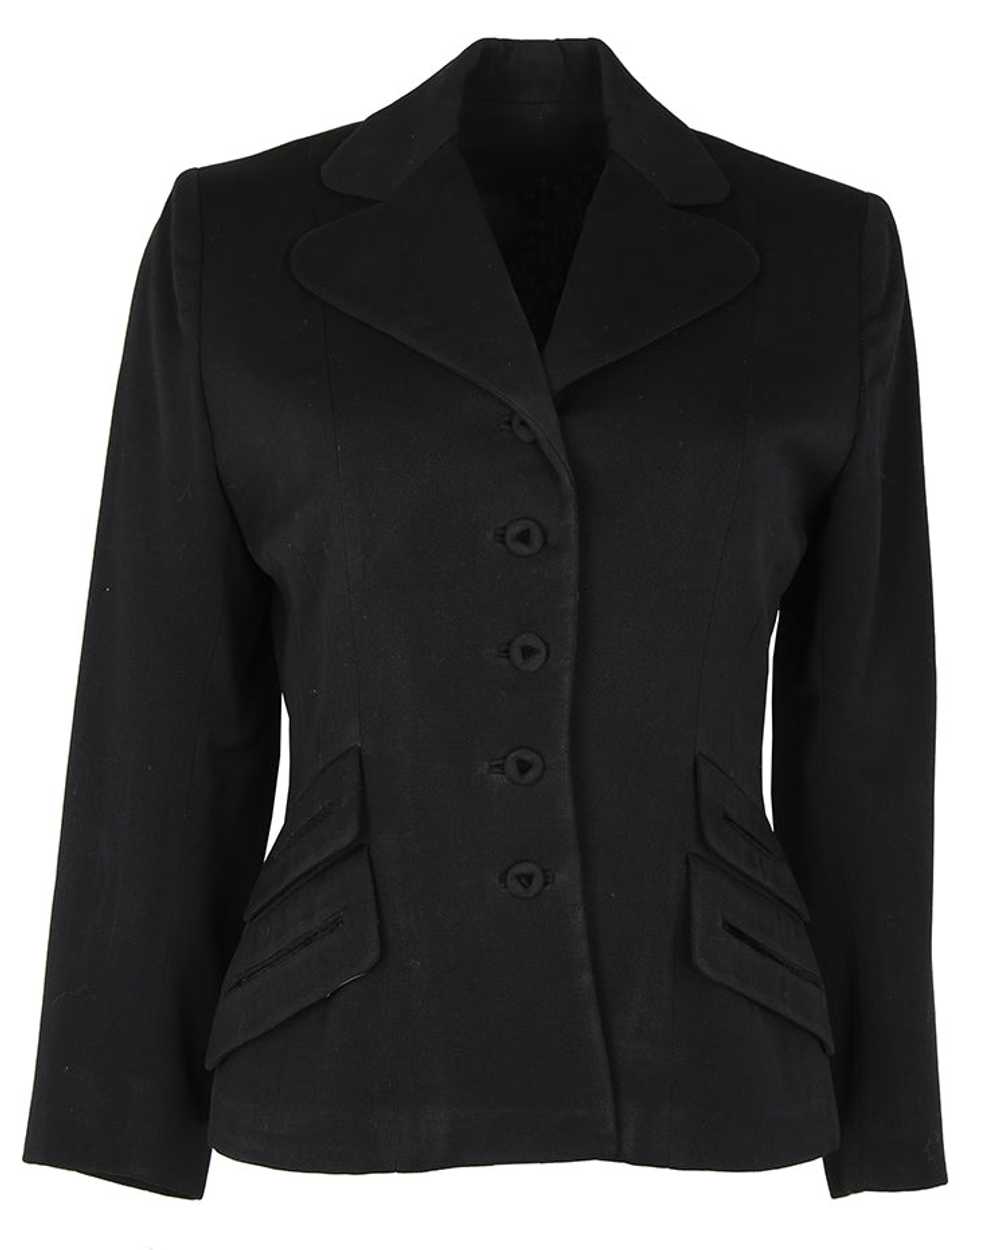 1940s Black Tailored Jacket - S - image 2